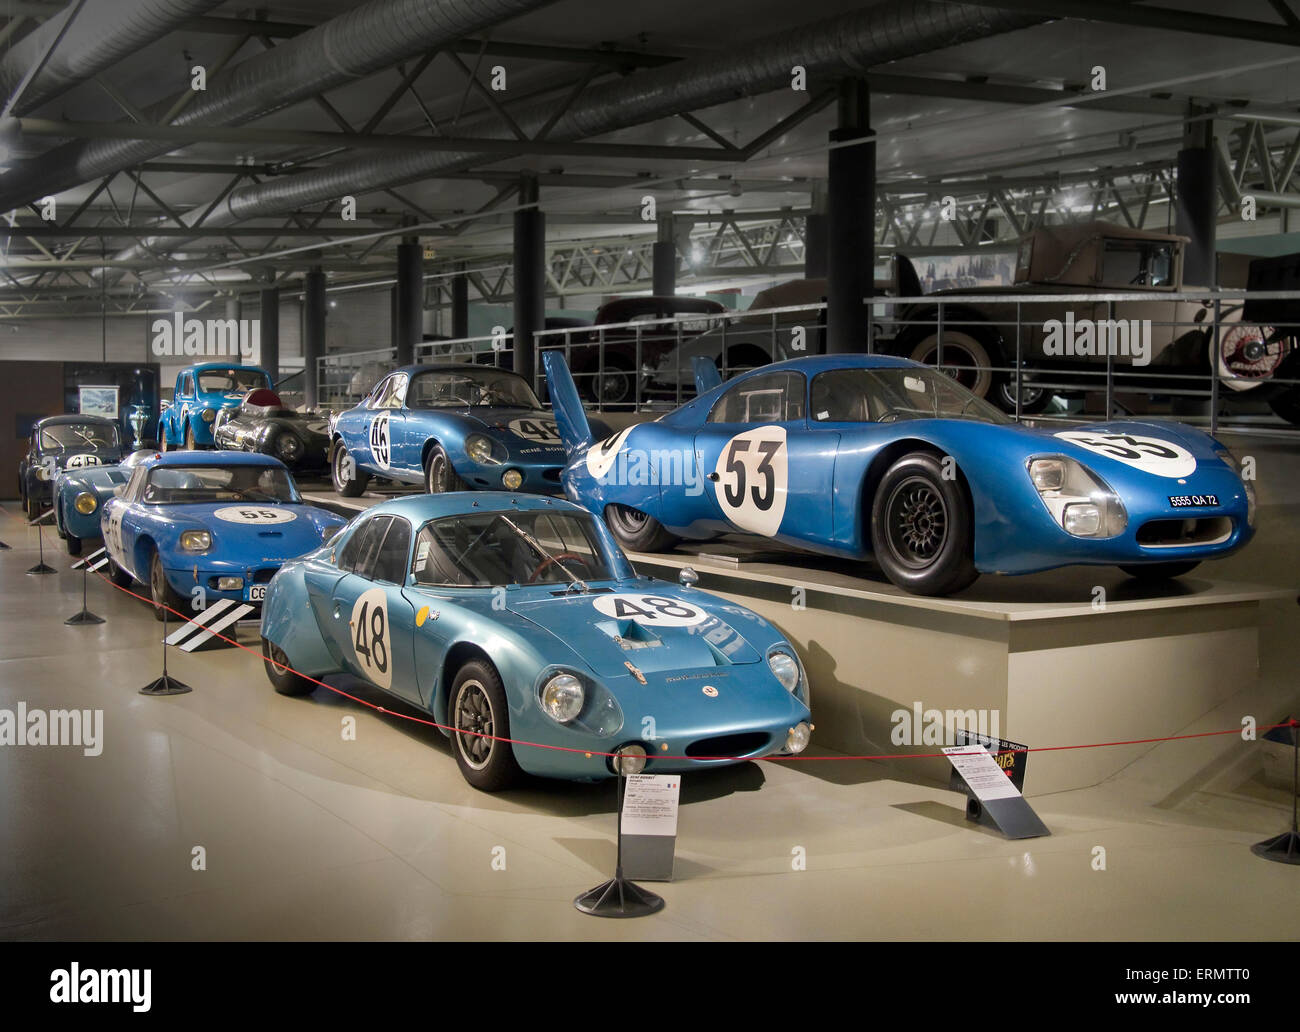 Las 24 horas de Le Mans Circuit de la Sarthe Museum Foto de stock